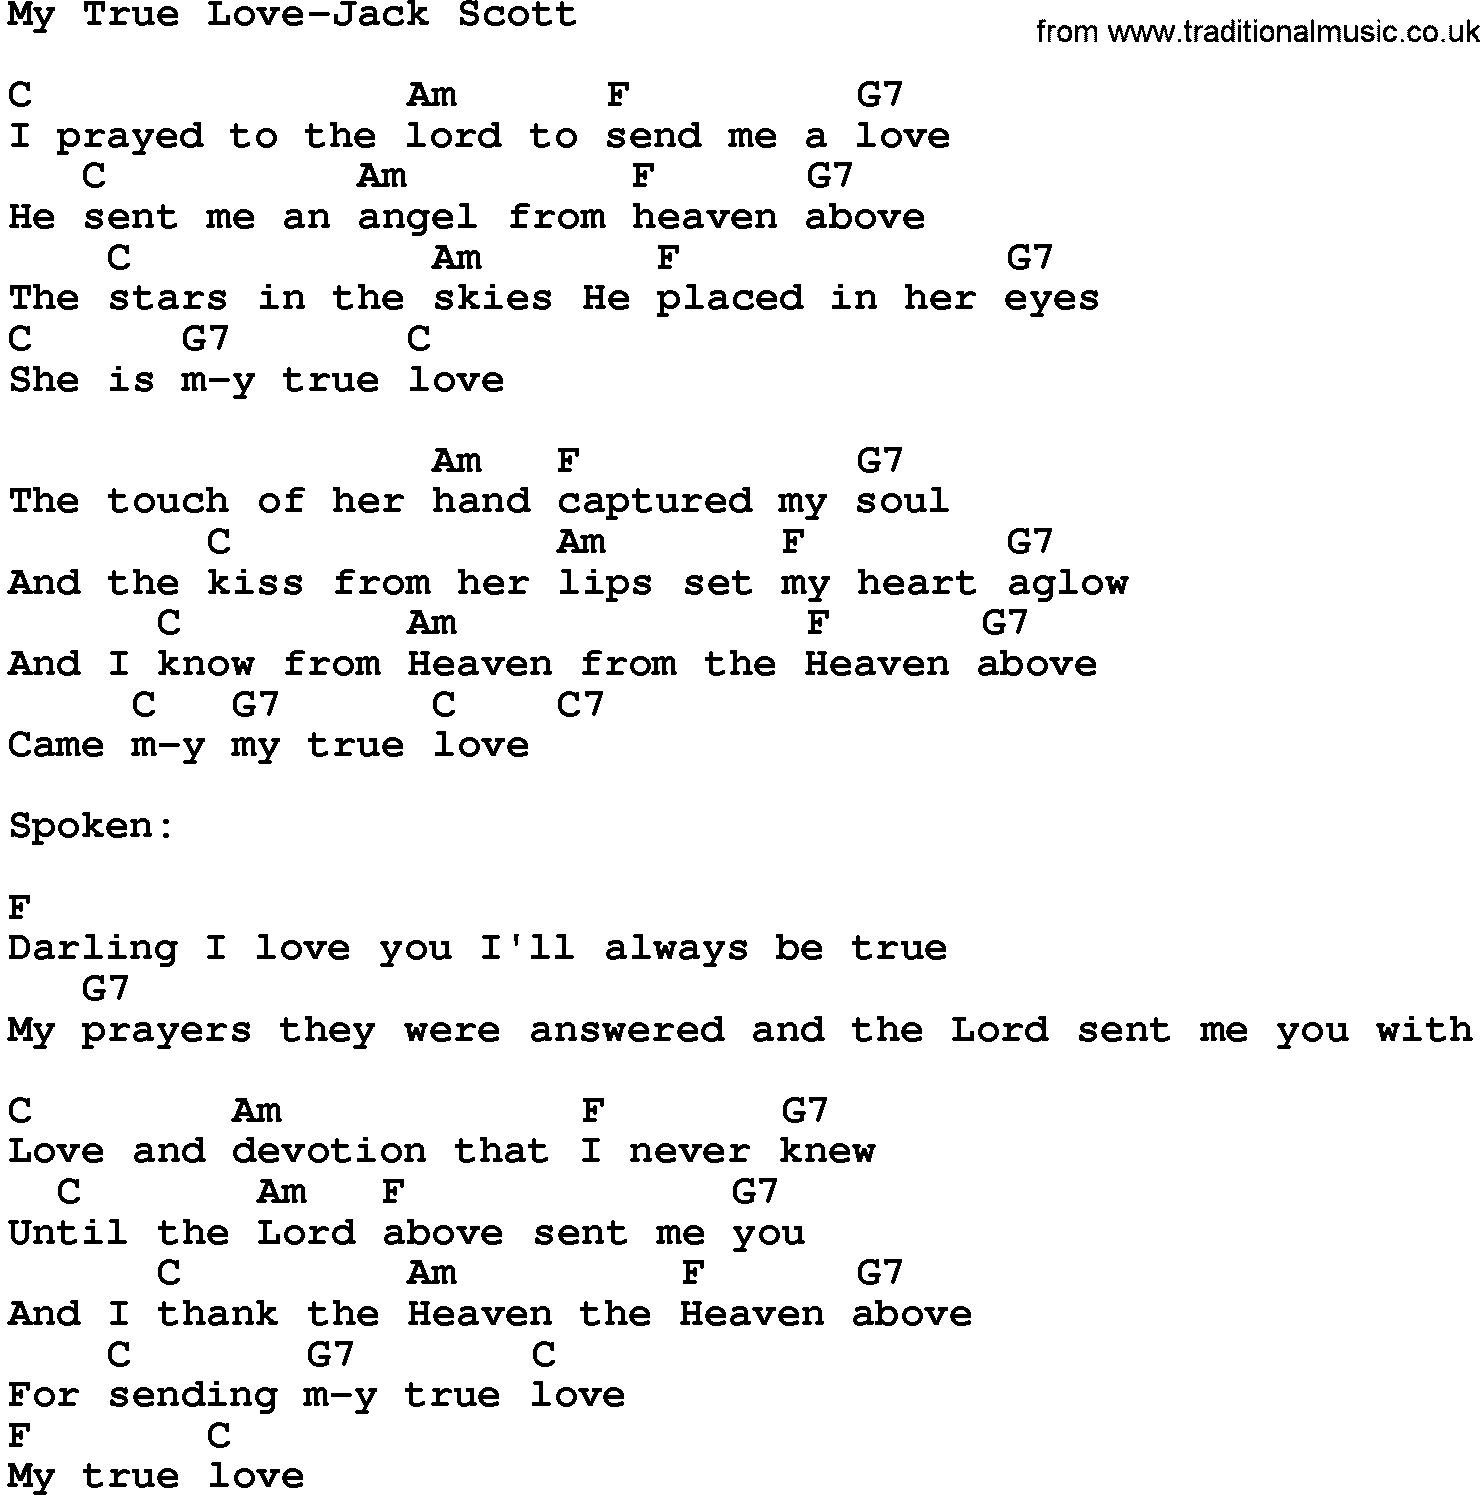 Country music song: My True Love-Jack Scott lyrics and chords